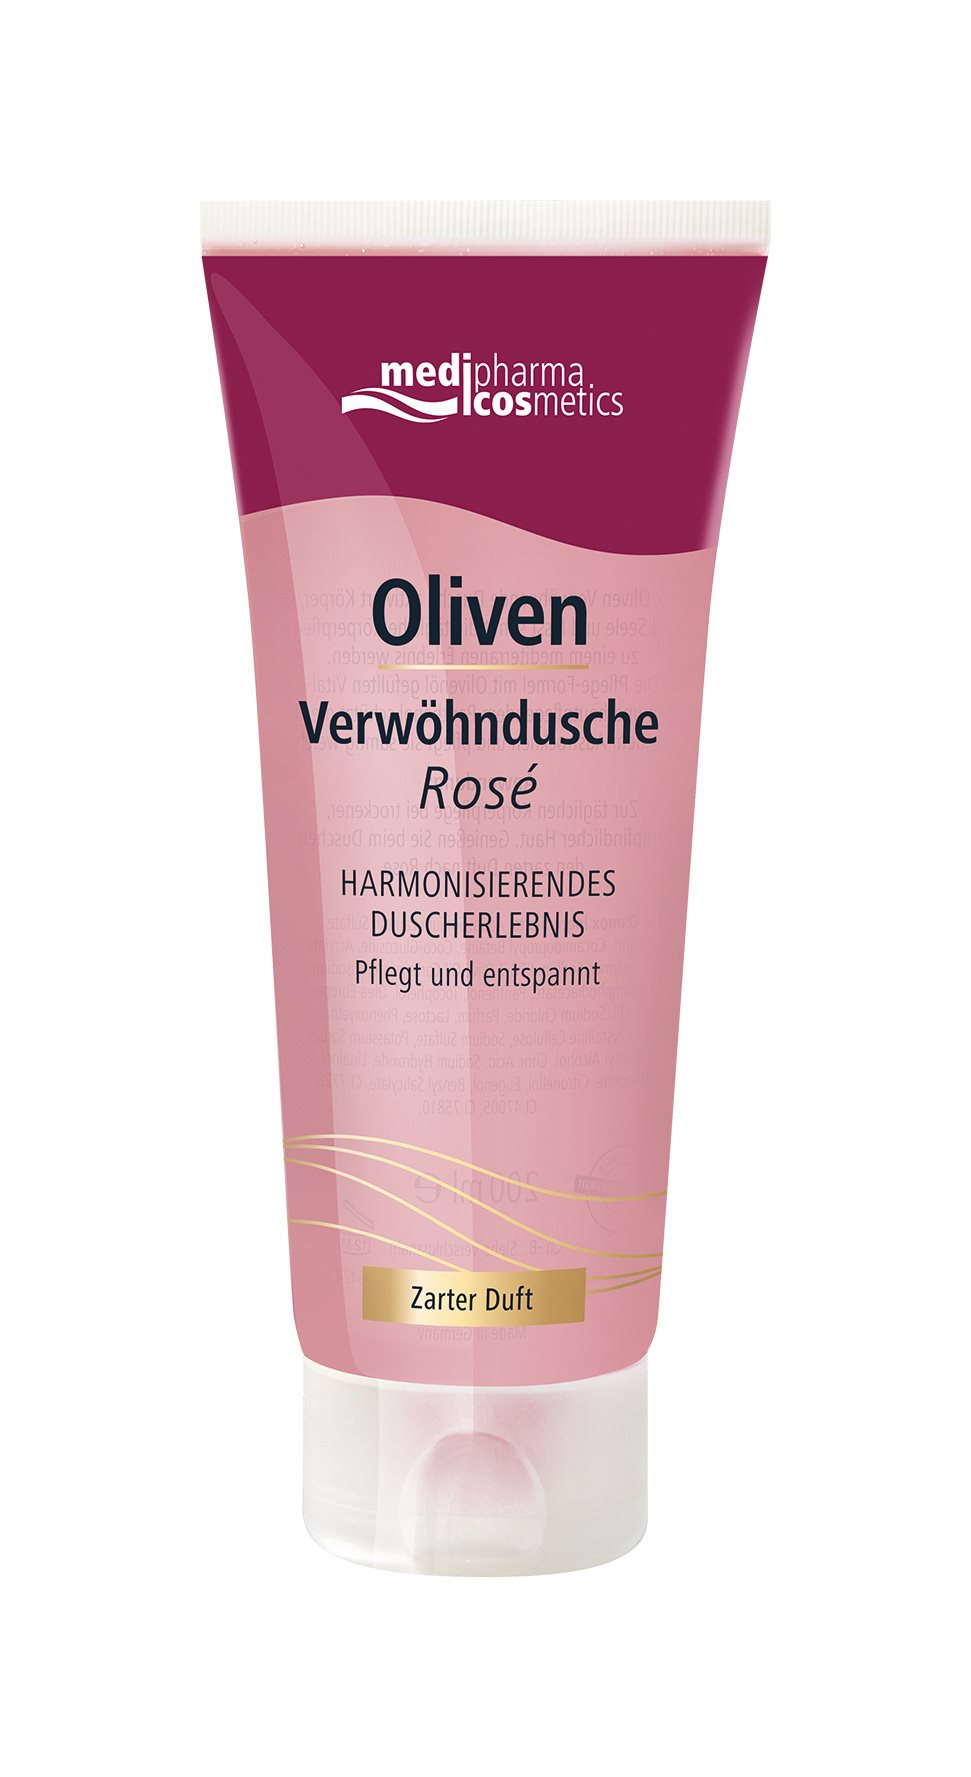 medipharma-cosmetics-Oliven-Verwoehndusche-Rose